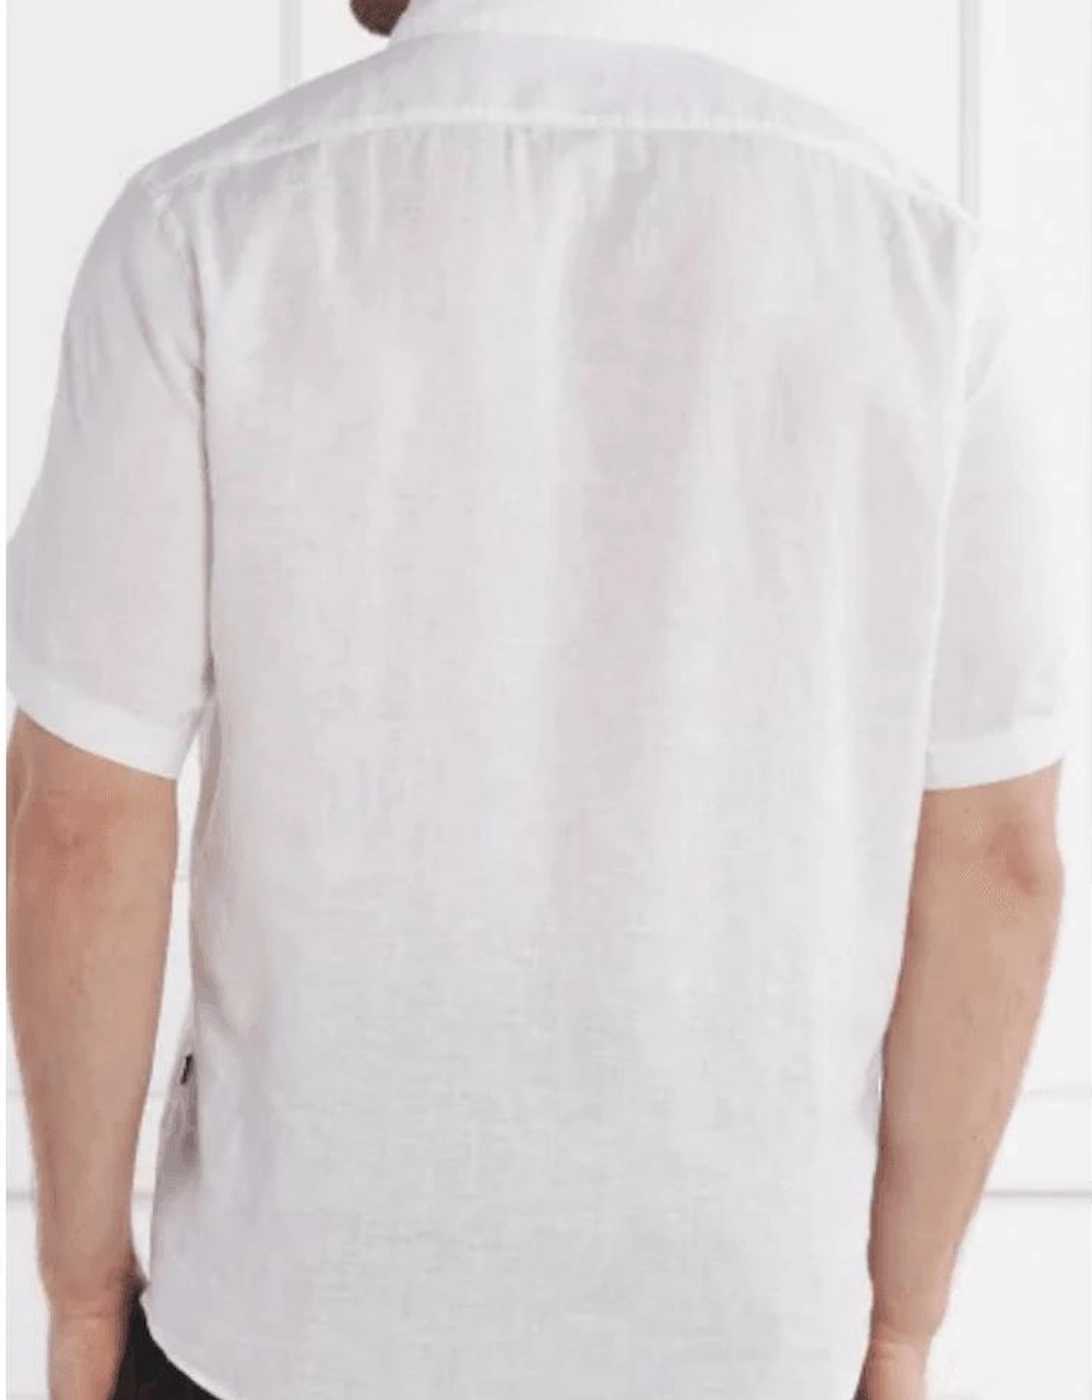 S-Liam Regular Fit Short Sleeve White Shirt